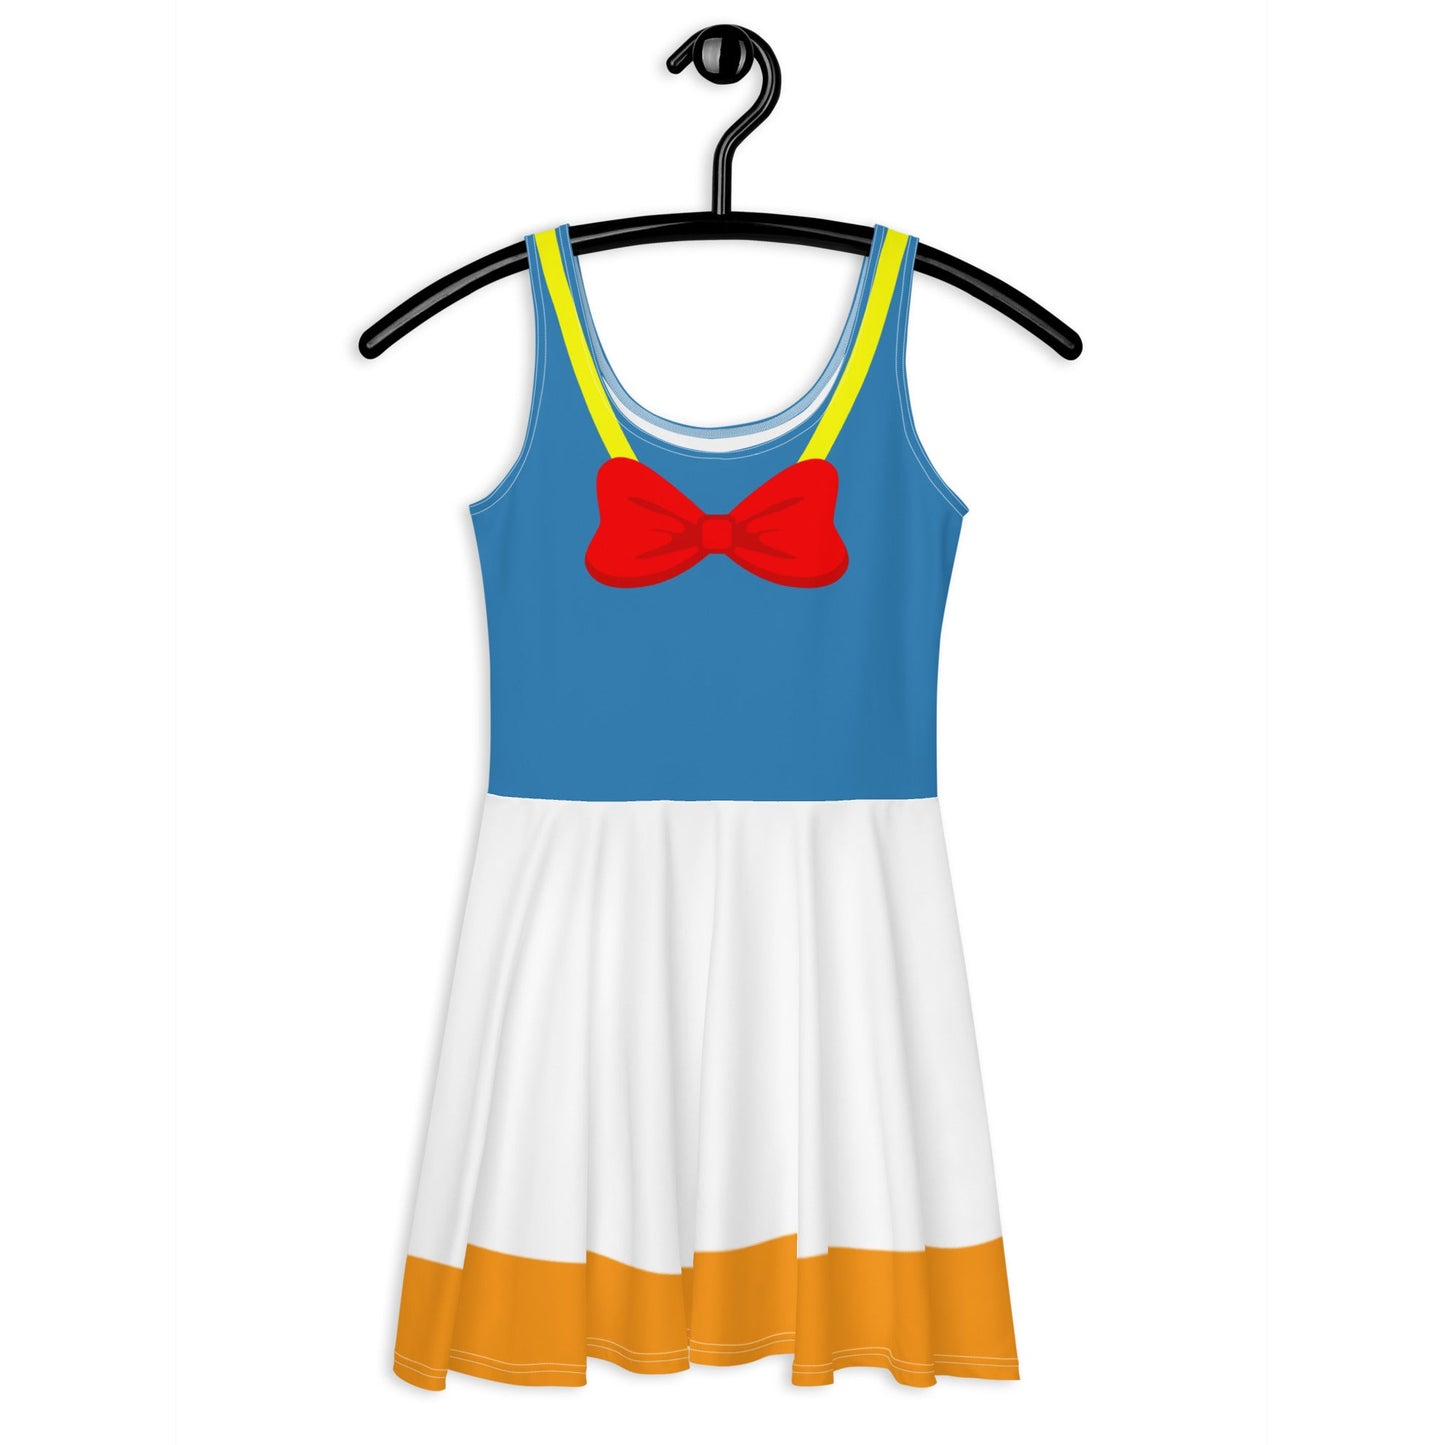 Grumpy Duck Skater Dress active disney familycouple shirtsdisney adult#tag4##tag5##tag6#